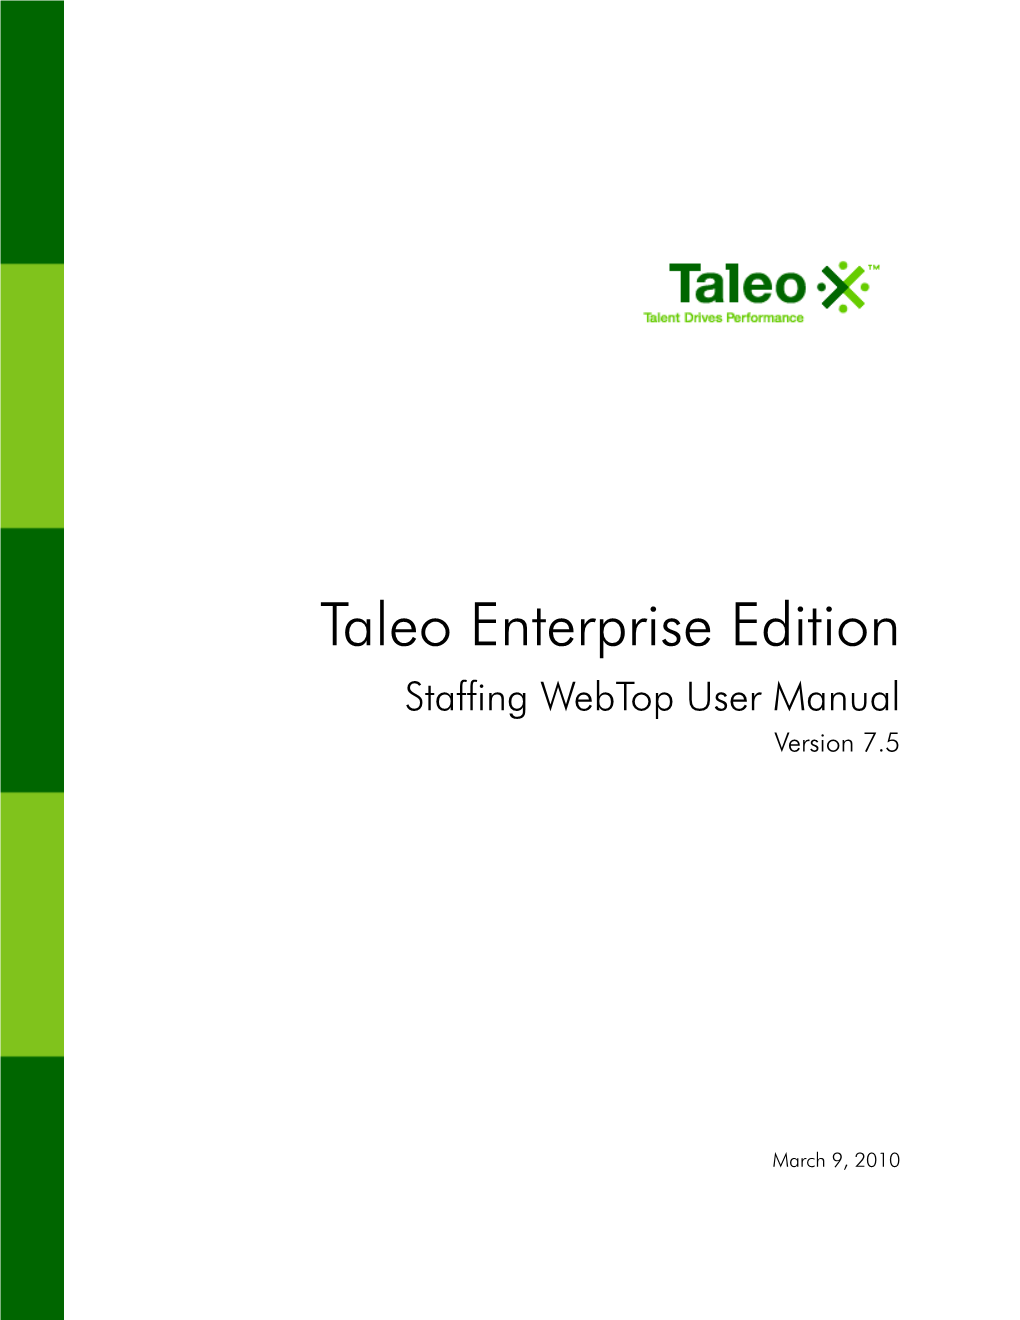 Taleo Enterprise Edition Staffing Webtop User Manual Version 7.5